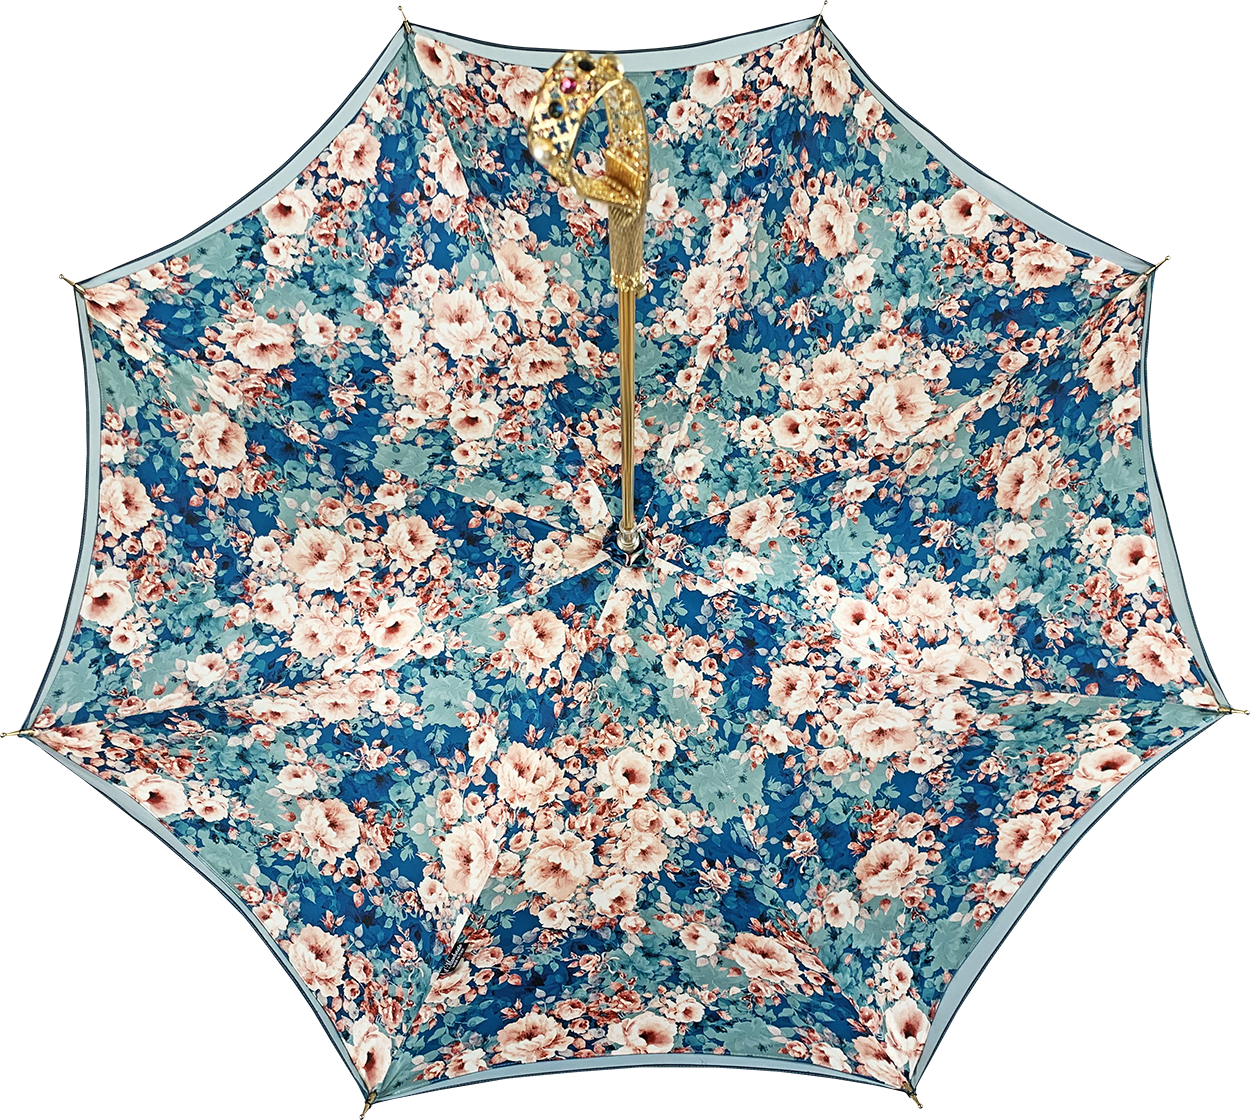 Floral umbrella in refined octane